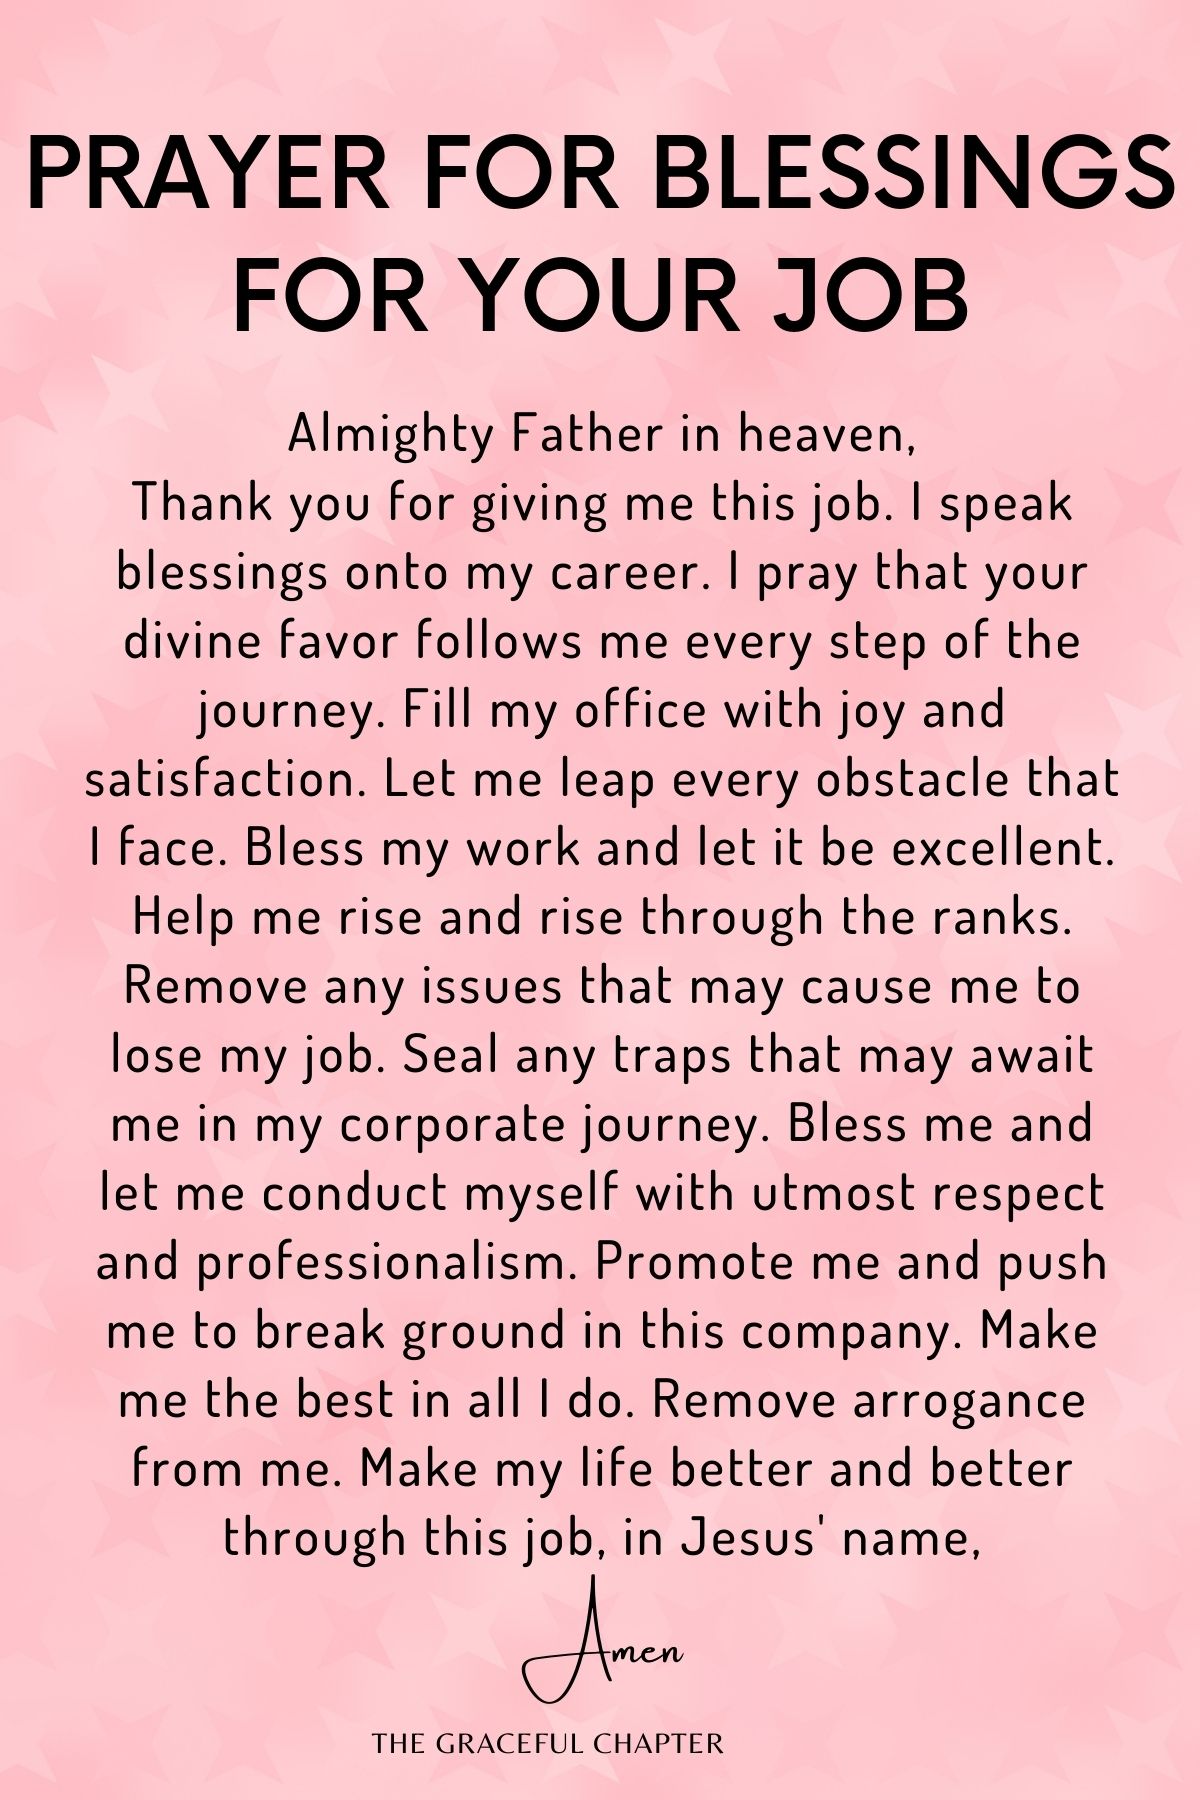 Prayers for blessings for your job